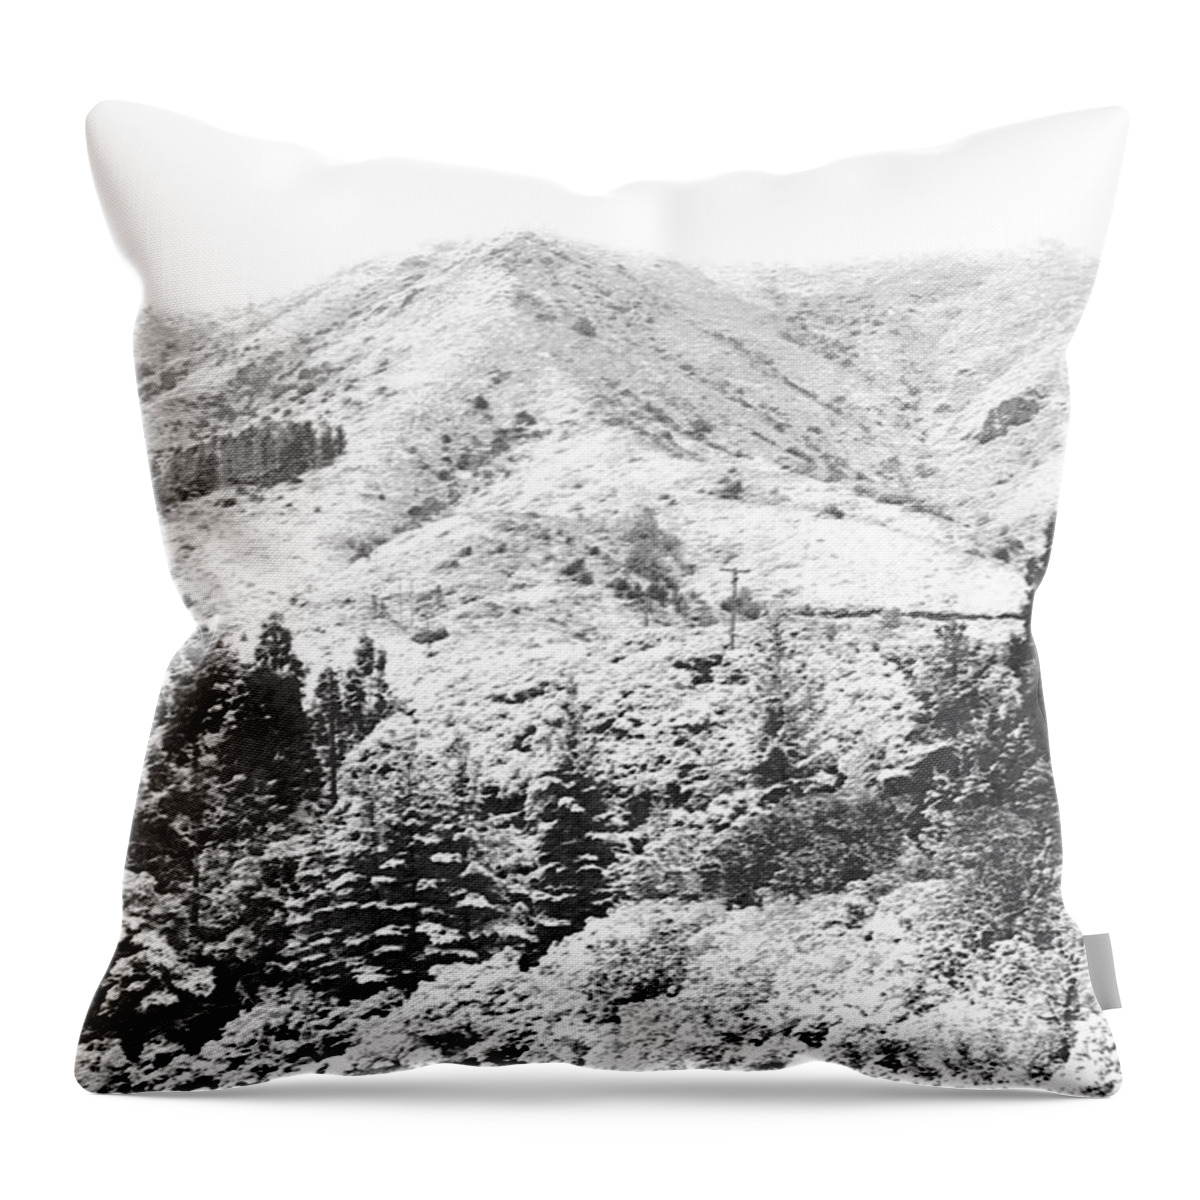 Mount Tamalpais Throw Pillow featuring the photograph Snow on Mt. Tamalpais 1974 by Ben Upham III